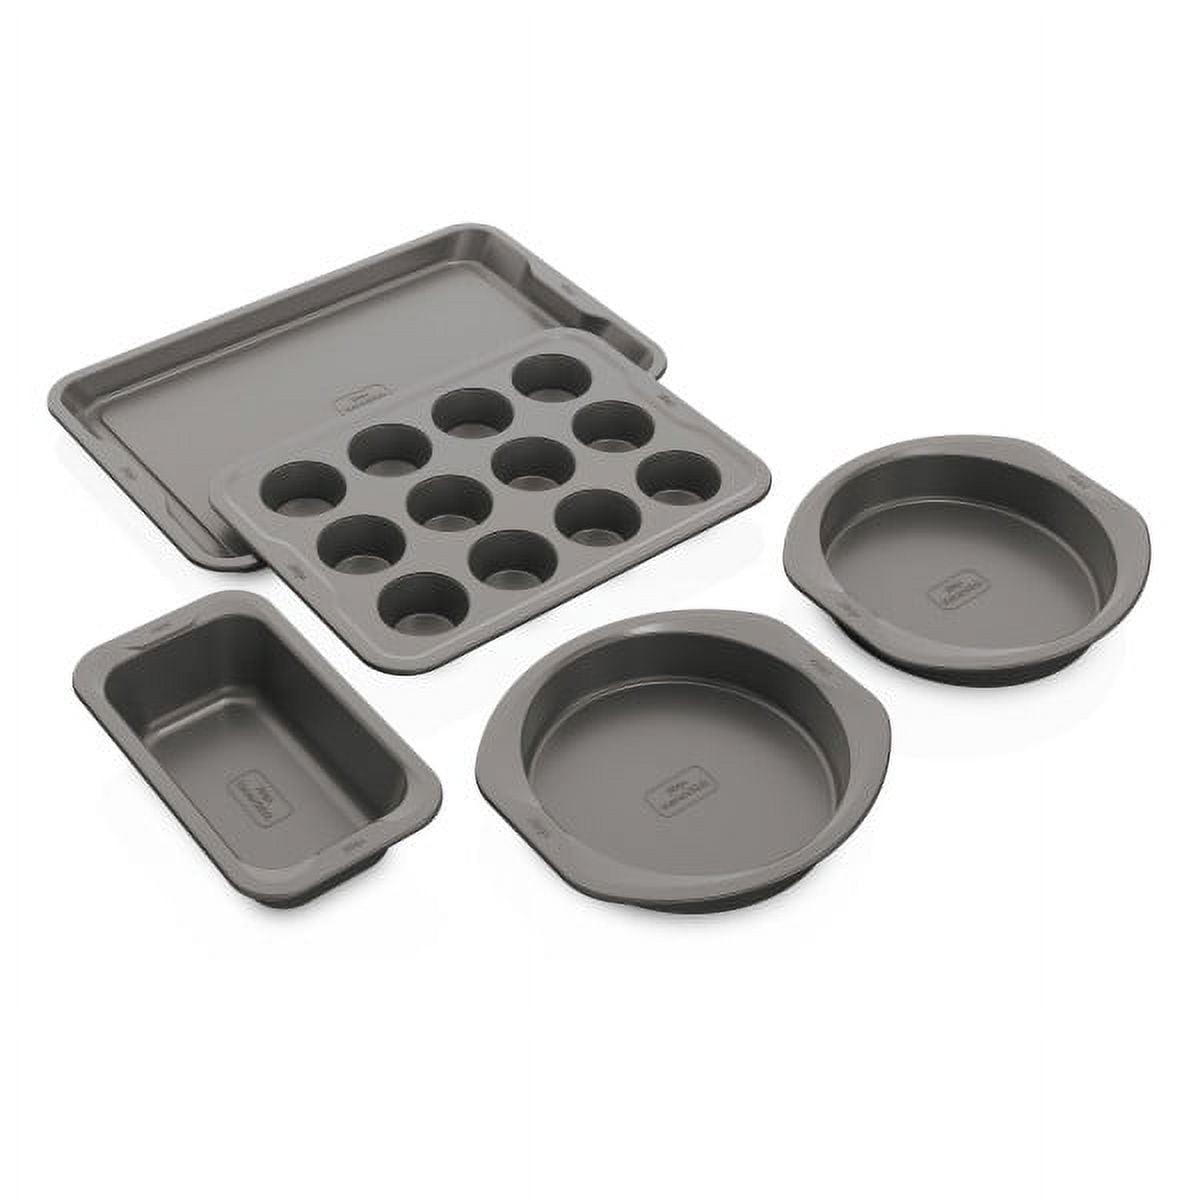  Baking Set for Ninja Foodi 6.5, 8Qt,Accessories for Instant Pot  8Qt,Nonstick Bakeware Set Compatible with Ninja Foodi  OP101,OP301,OP302,OP401,FD401,FD302,OS101,OS301,AG300,AG301,AG302,IG301,AG400  : Home & Kitchen